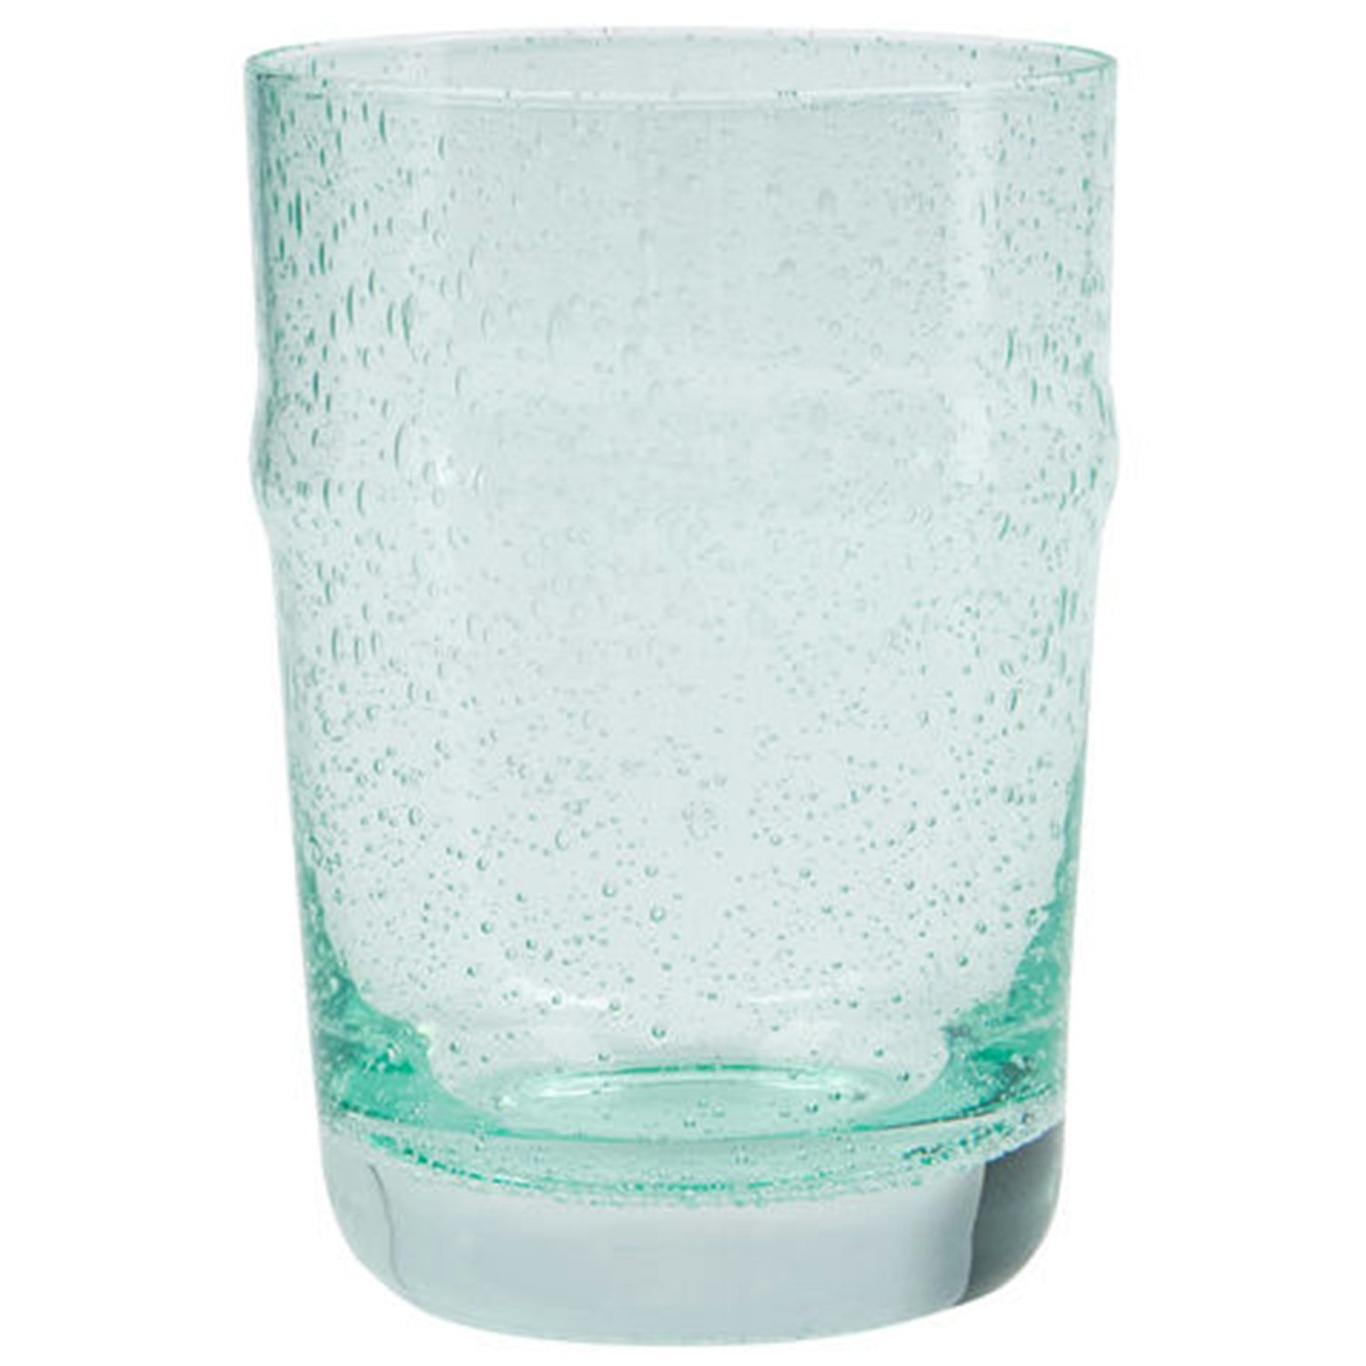 https://royaldesign.com/image/2/house-doctor-rain-drinking-glass-2-pack-12?w=800&quality=80